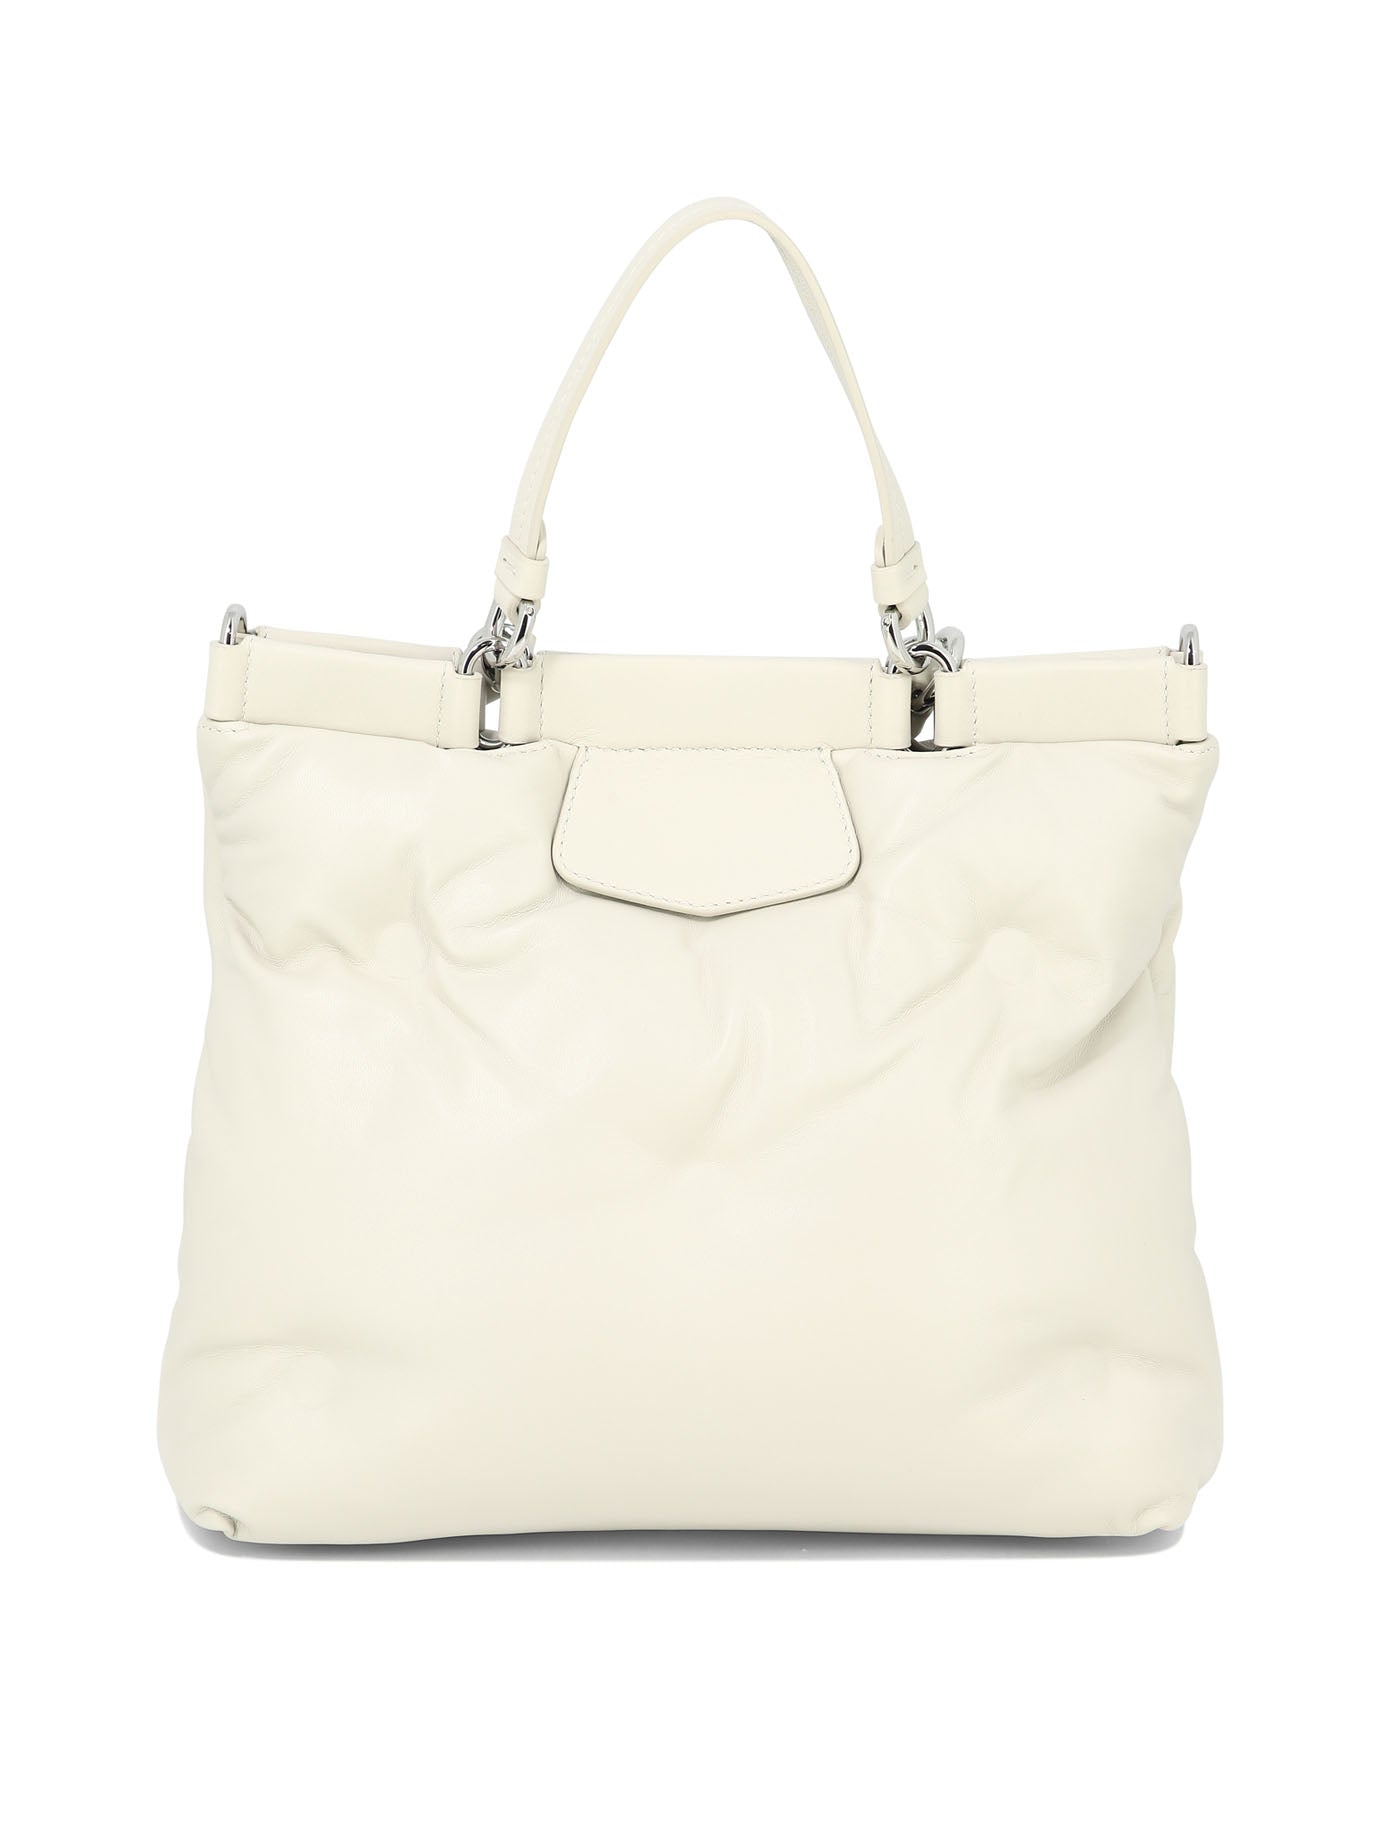 Shop Maison Margiela Luxurious White Leather Handbag For Women